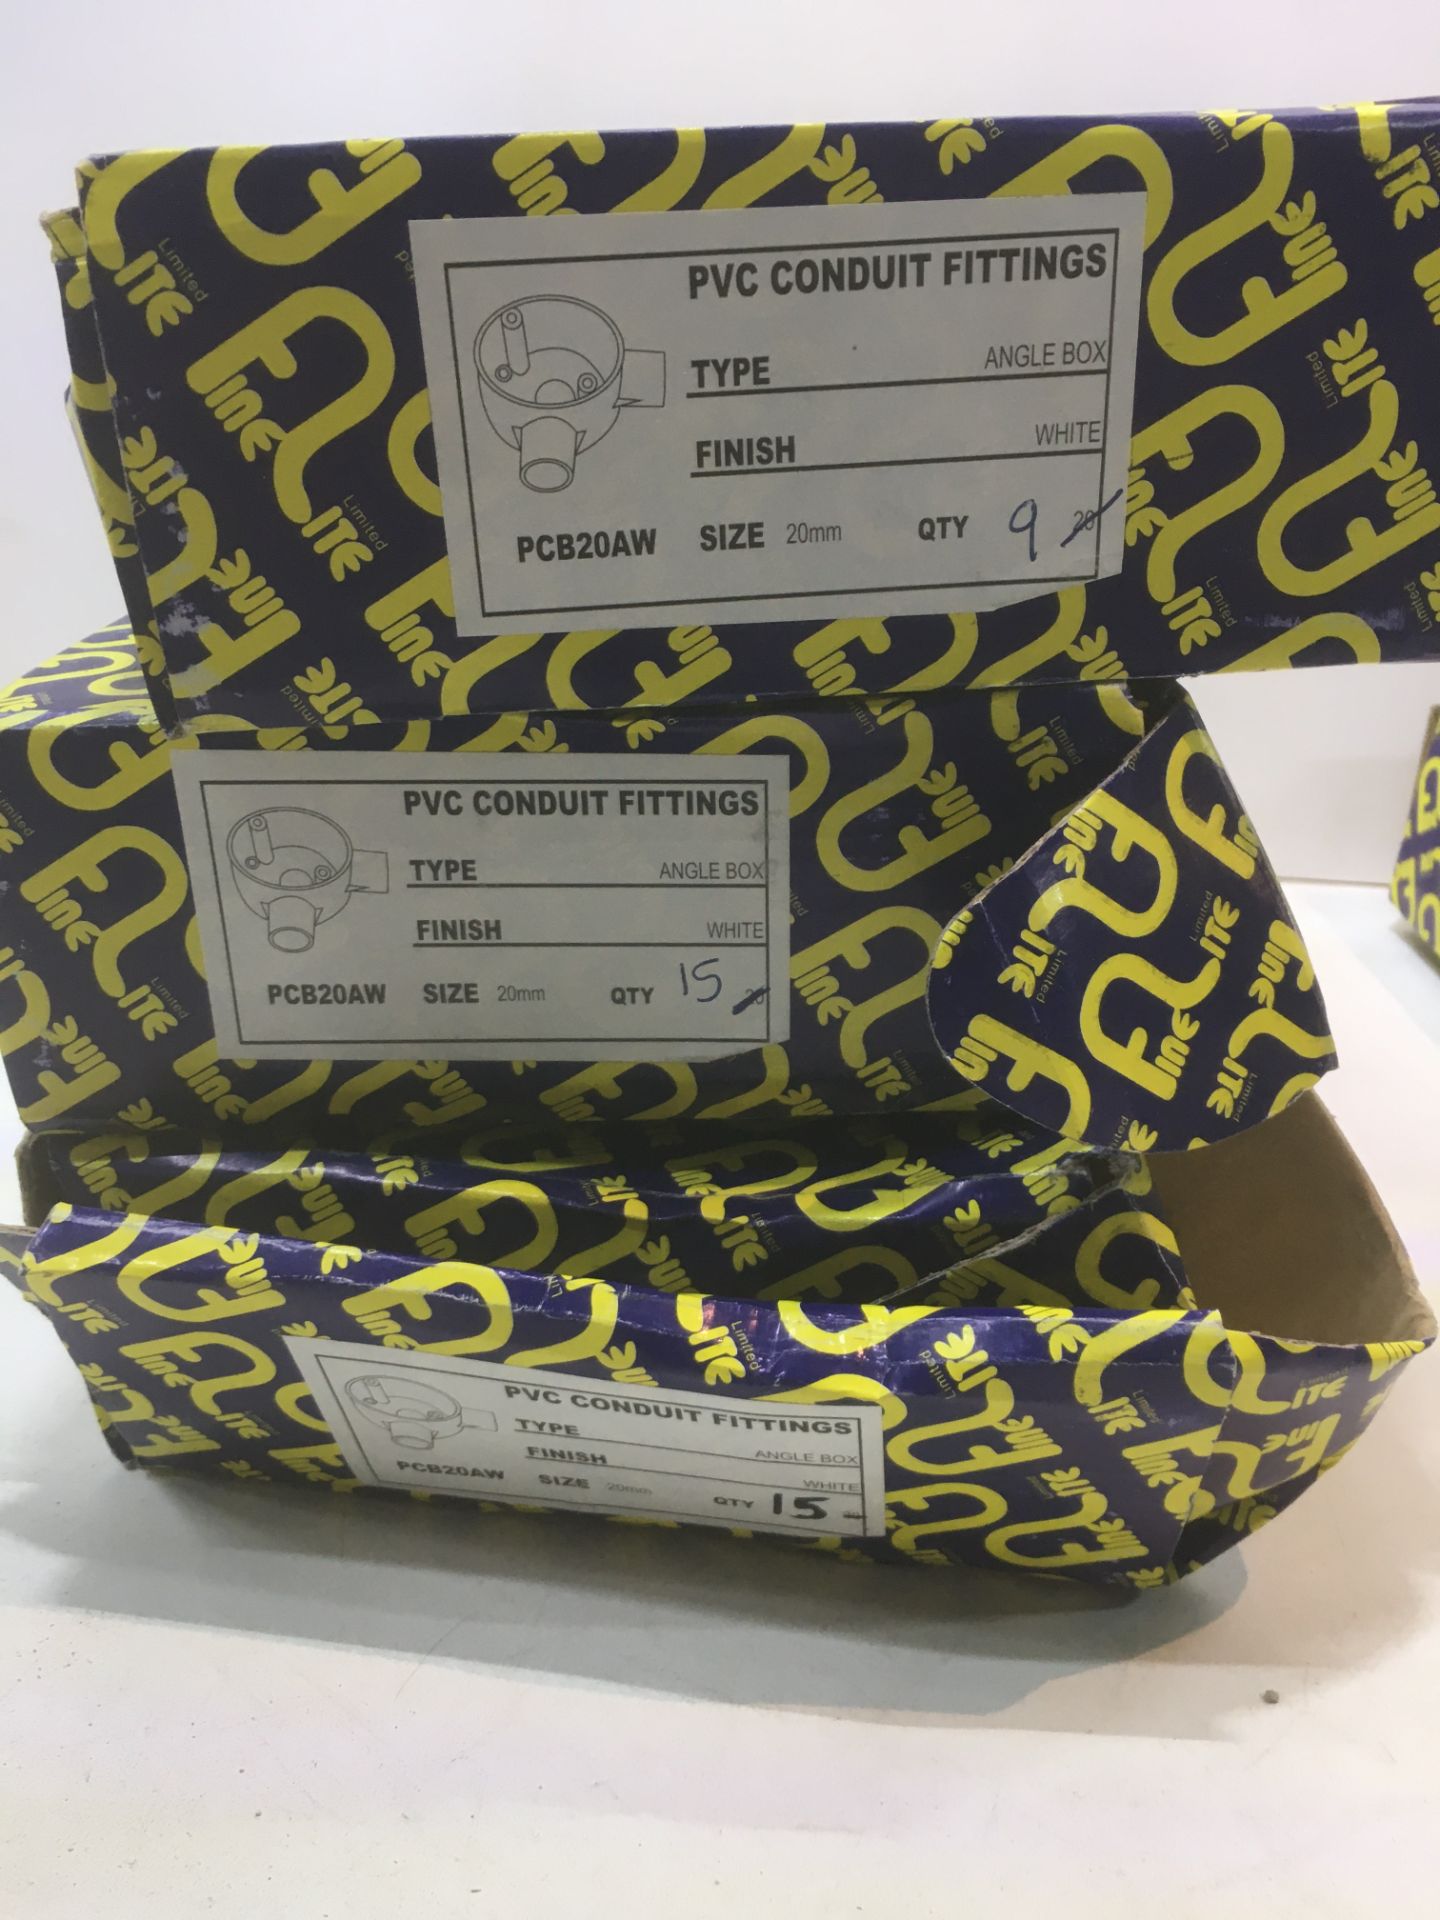 7 x Packs of PVC Conduit Fittings As Per Description - Image 7 of 9